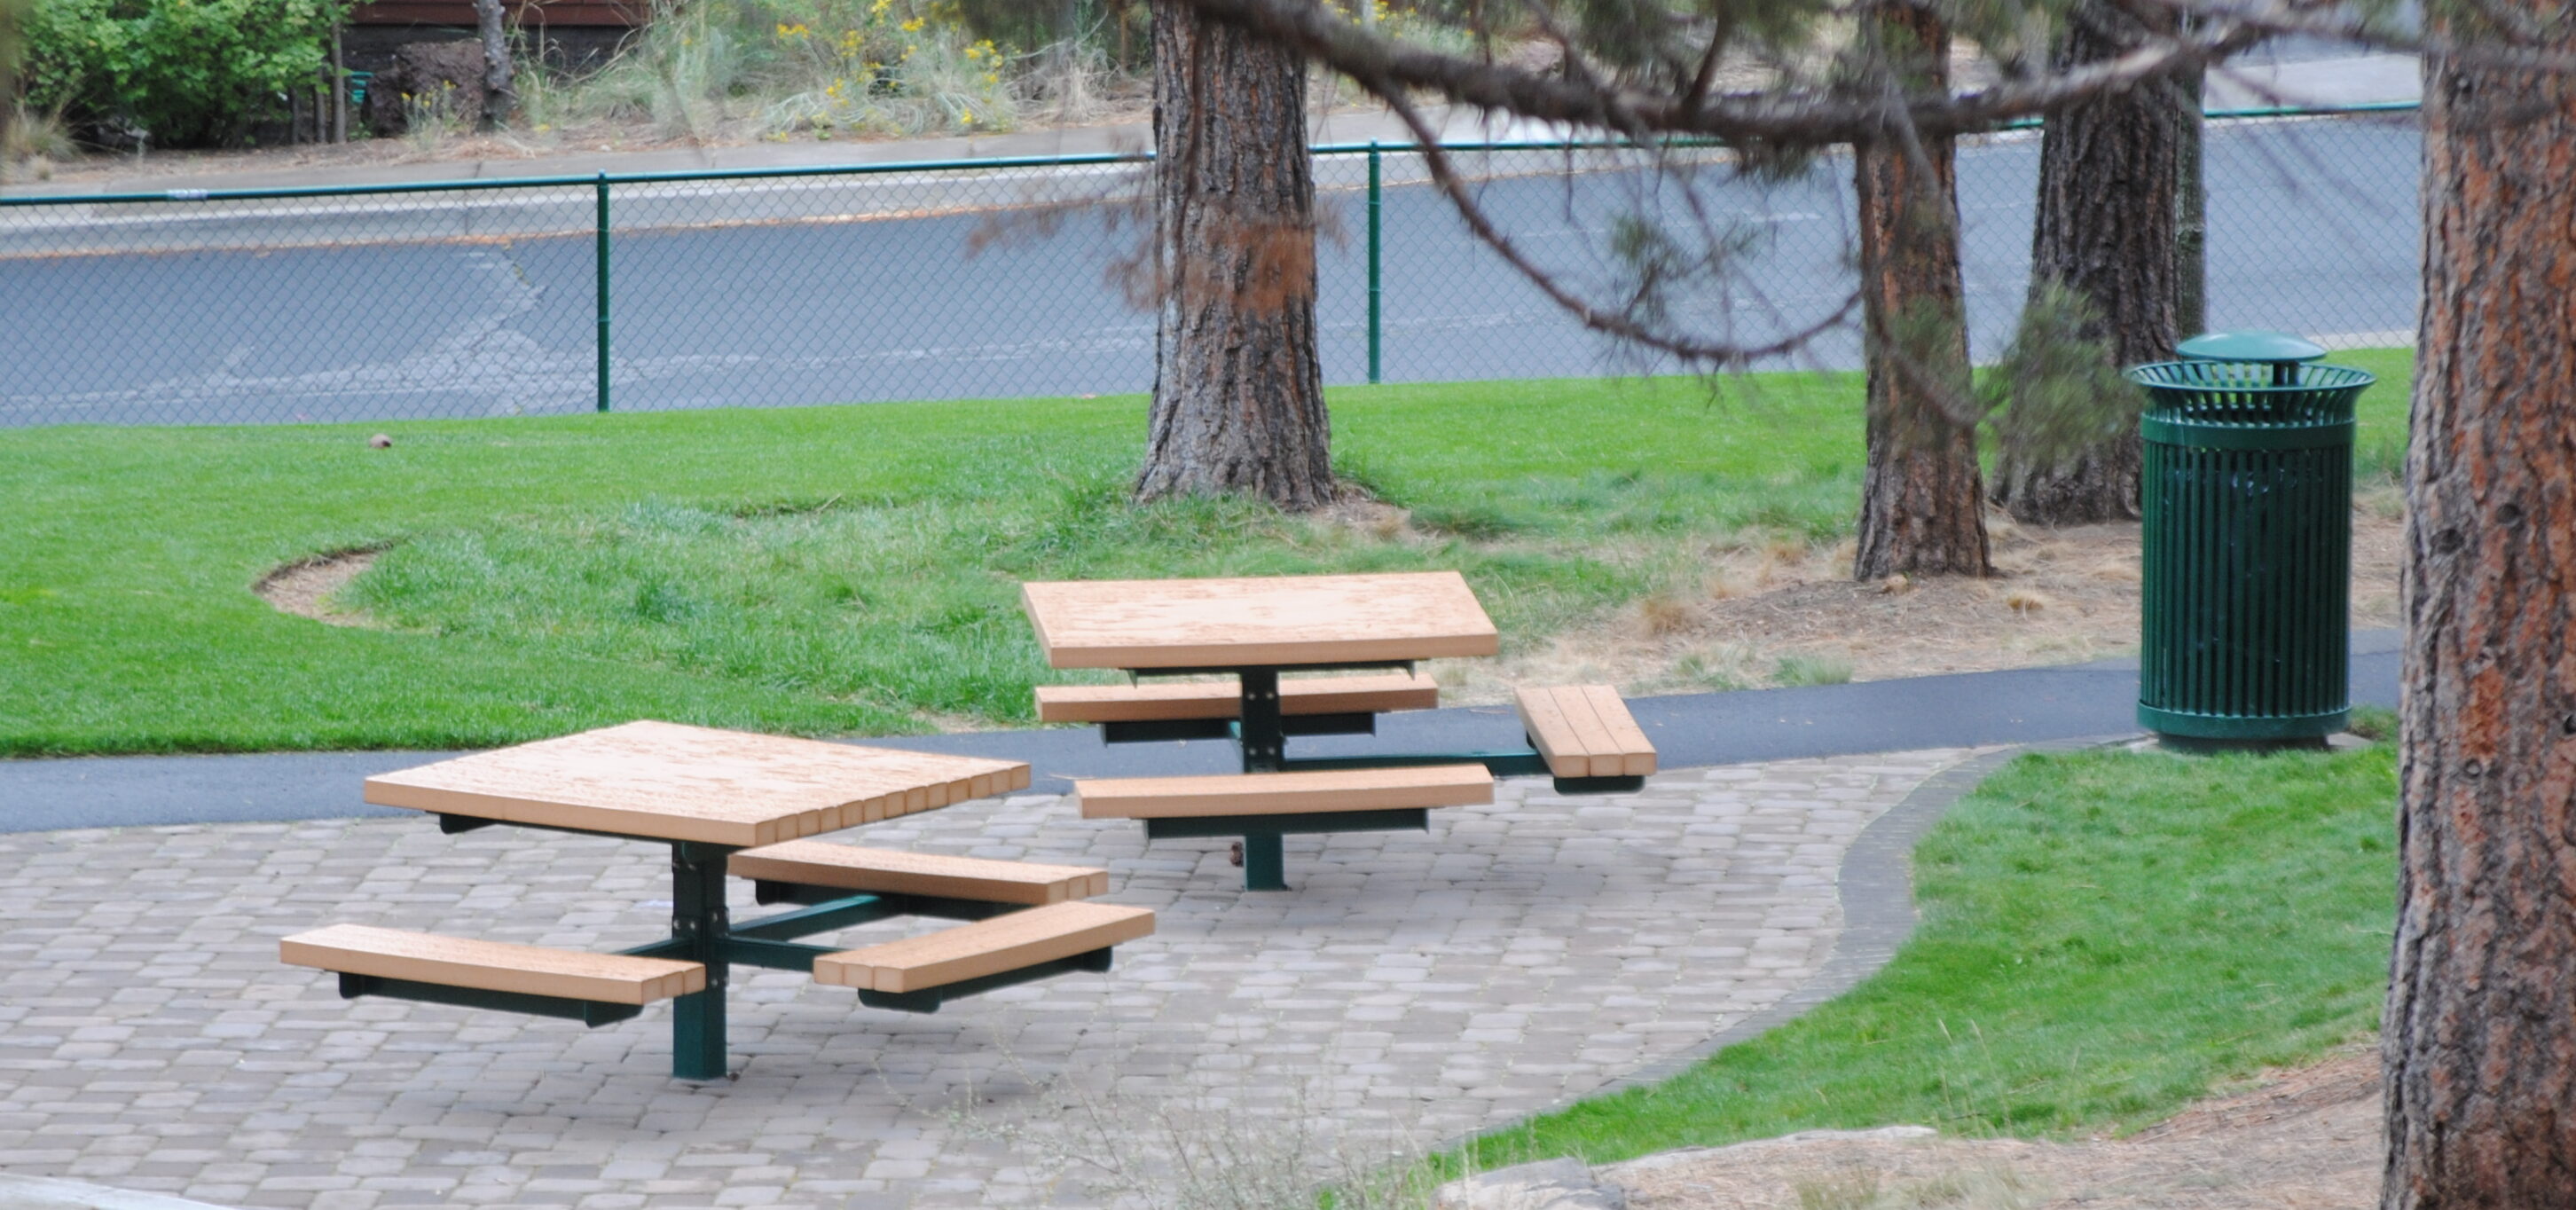 a picnic table at a park